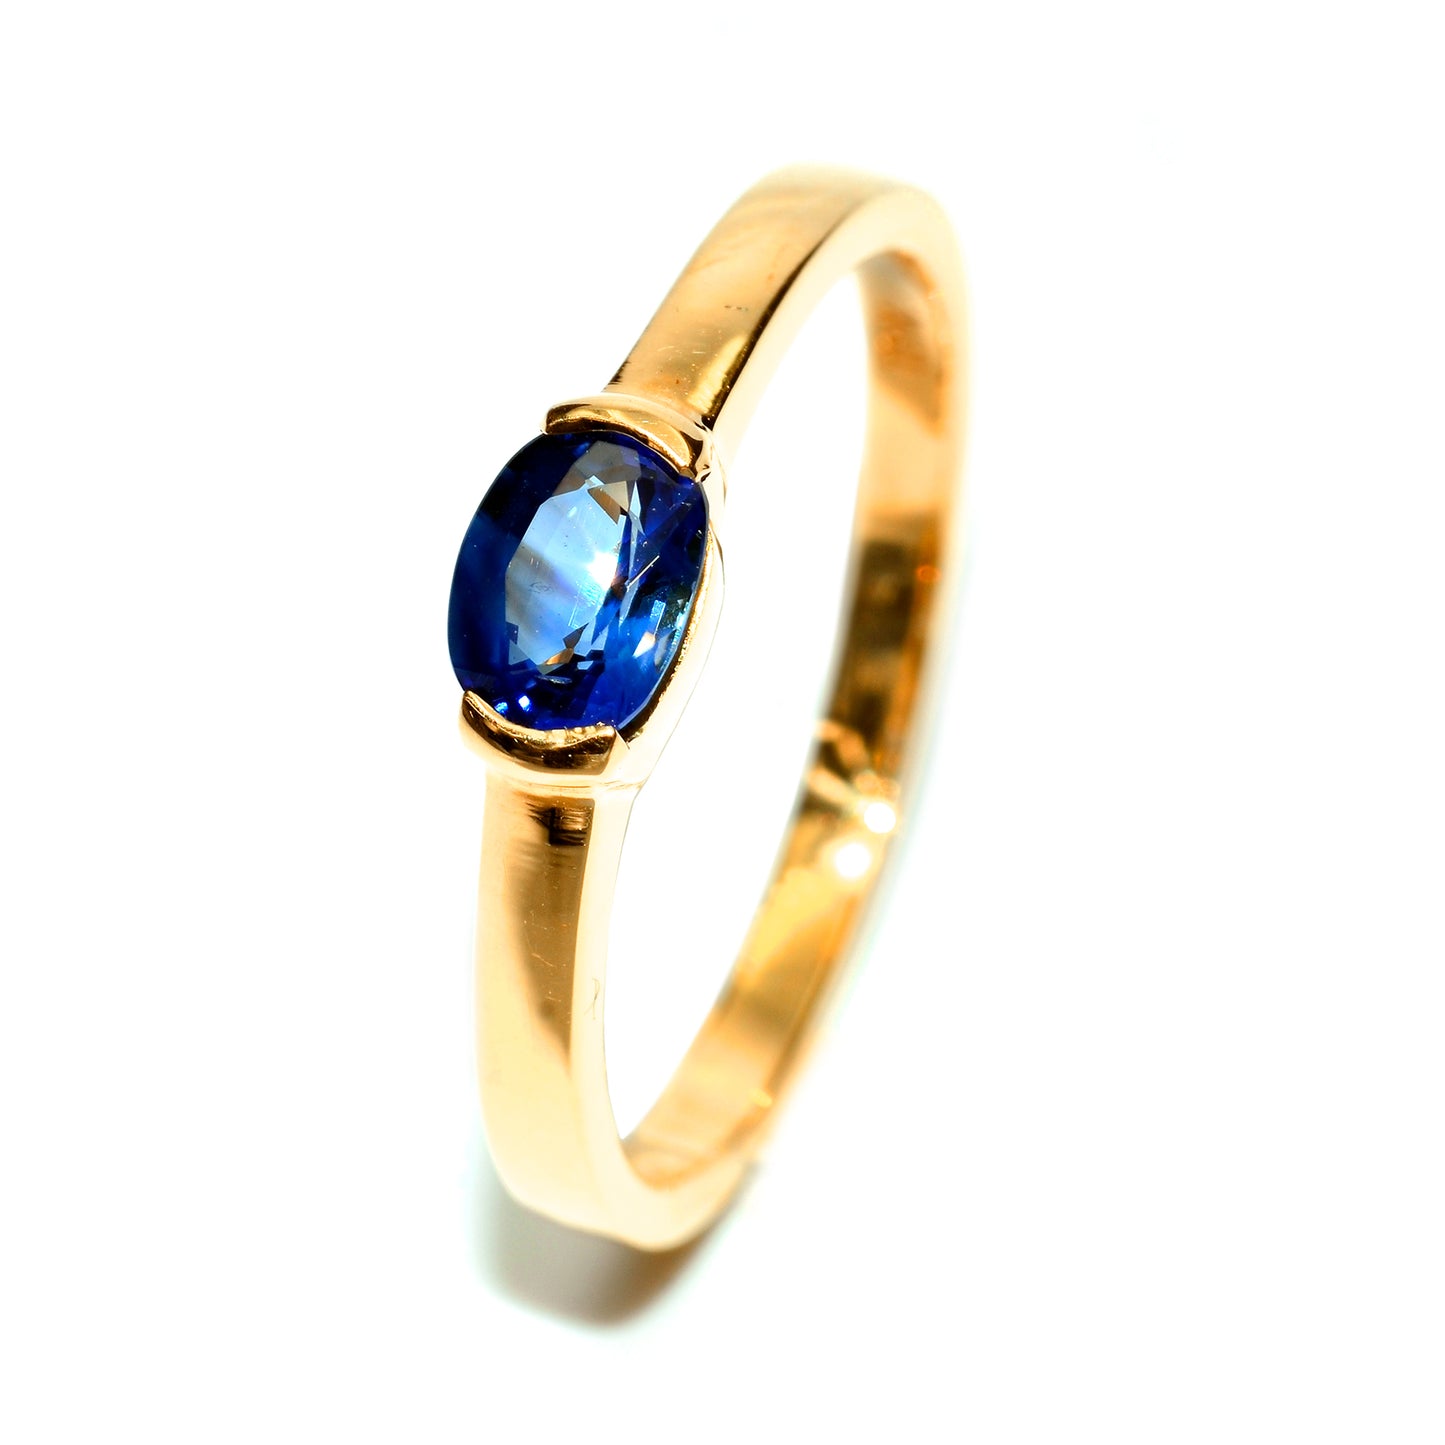 Half bezel blue sapphire ring in 18K yellow gold setting. Handmade by Shiraz Jewelry in Chiang Mai